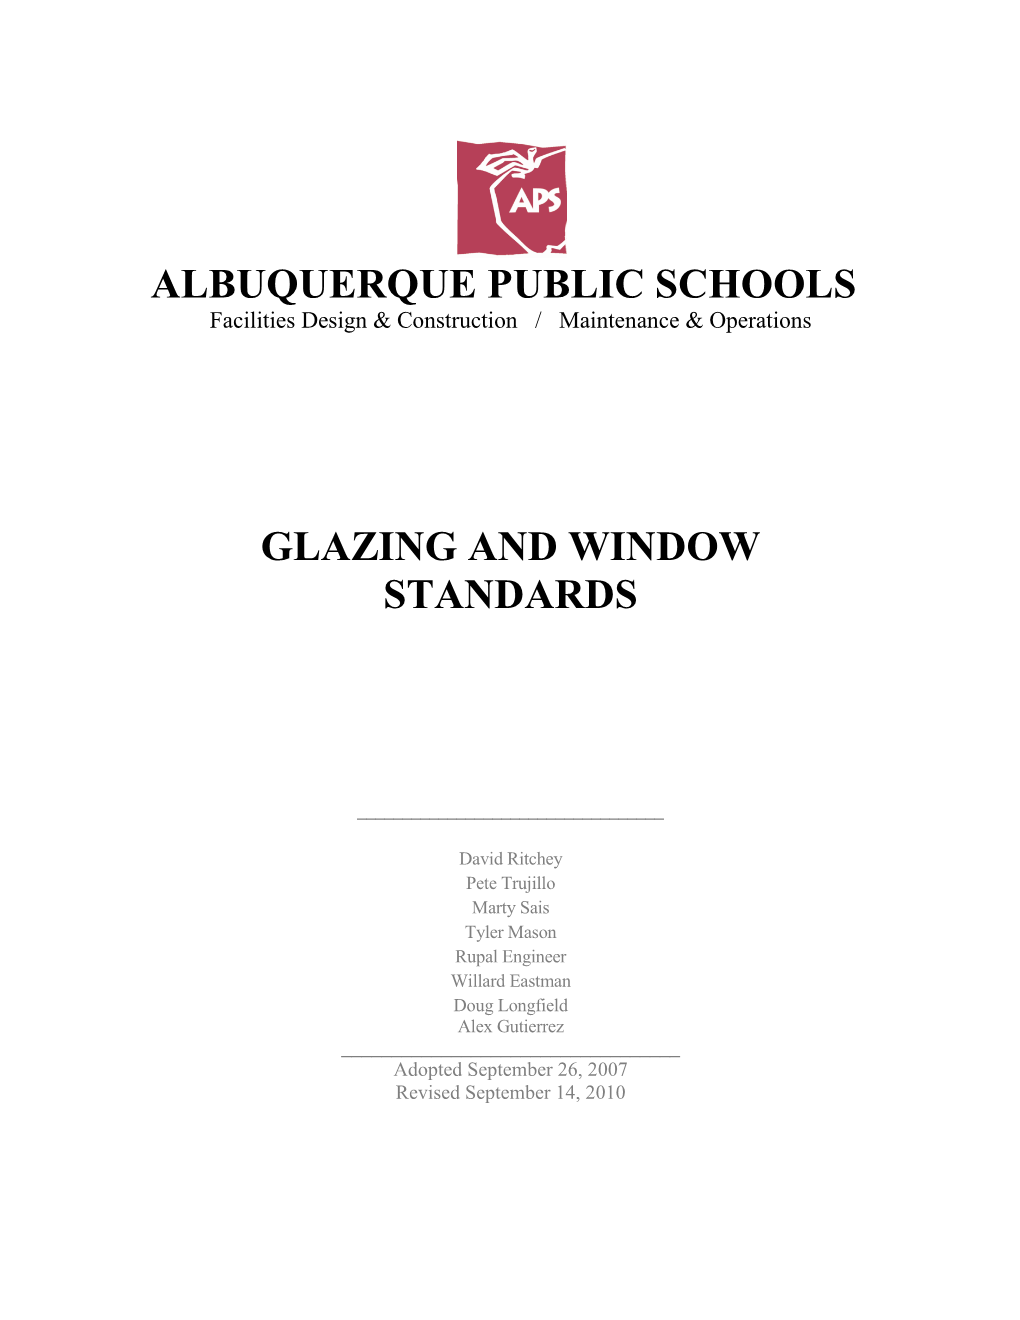 Glazing and Window Standards